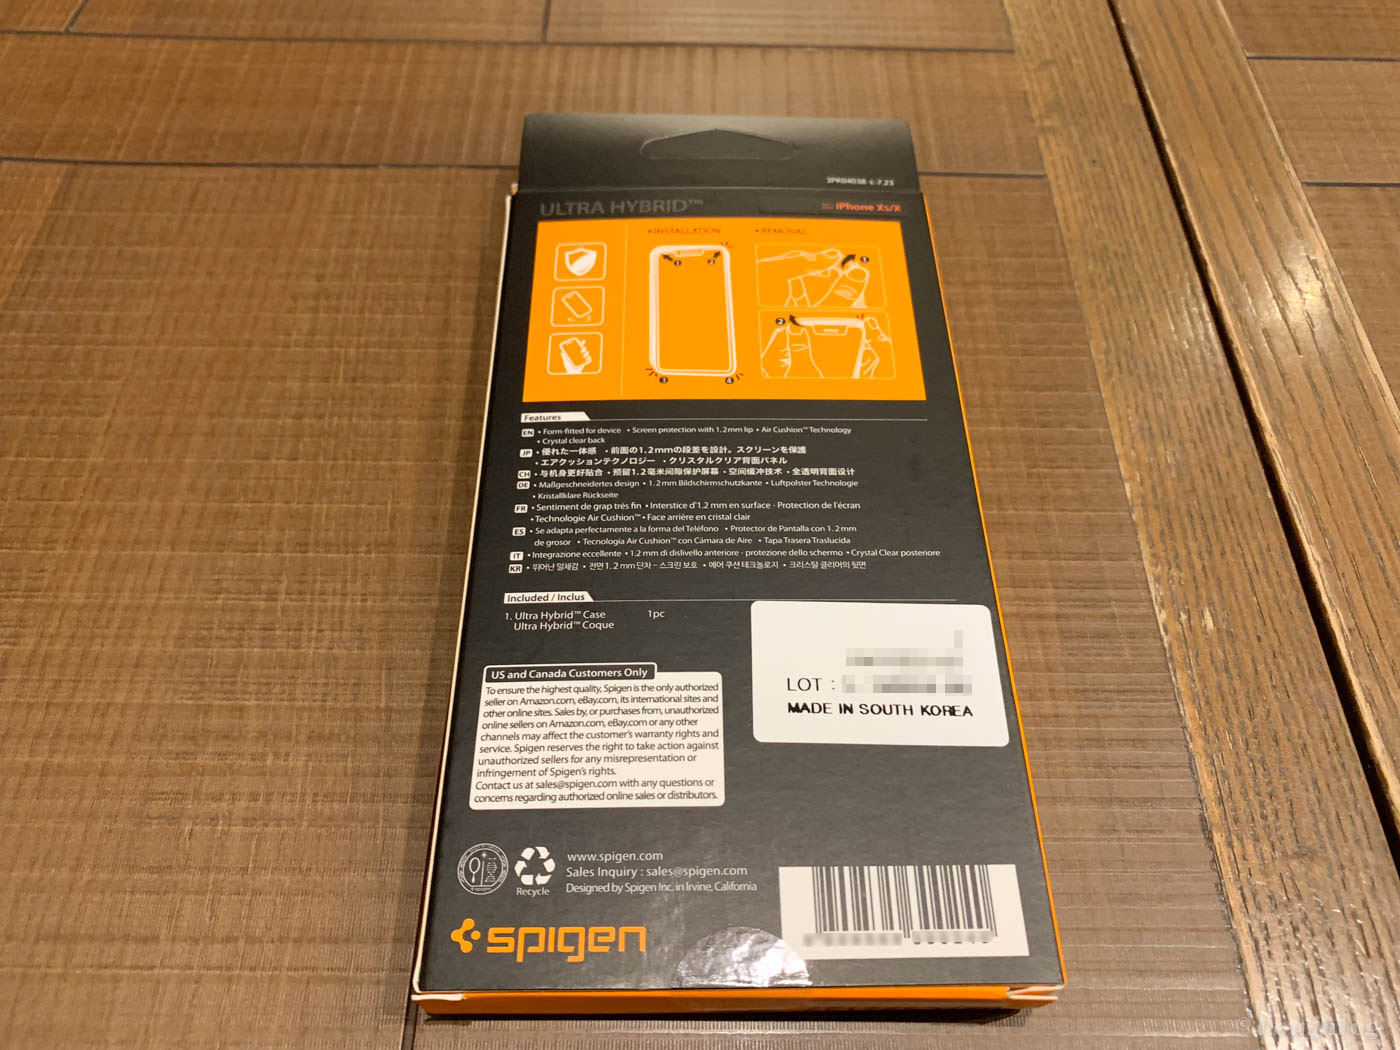 Spigen製iPhoneXSケース「ウルトラハイブリッド クリスタルクリア」を購入